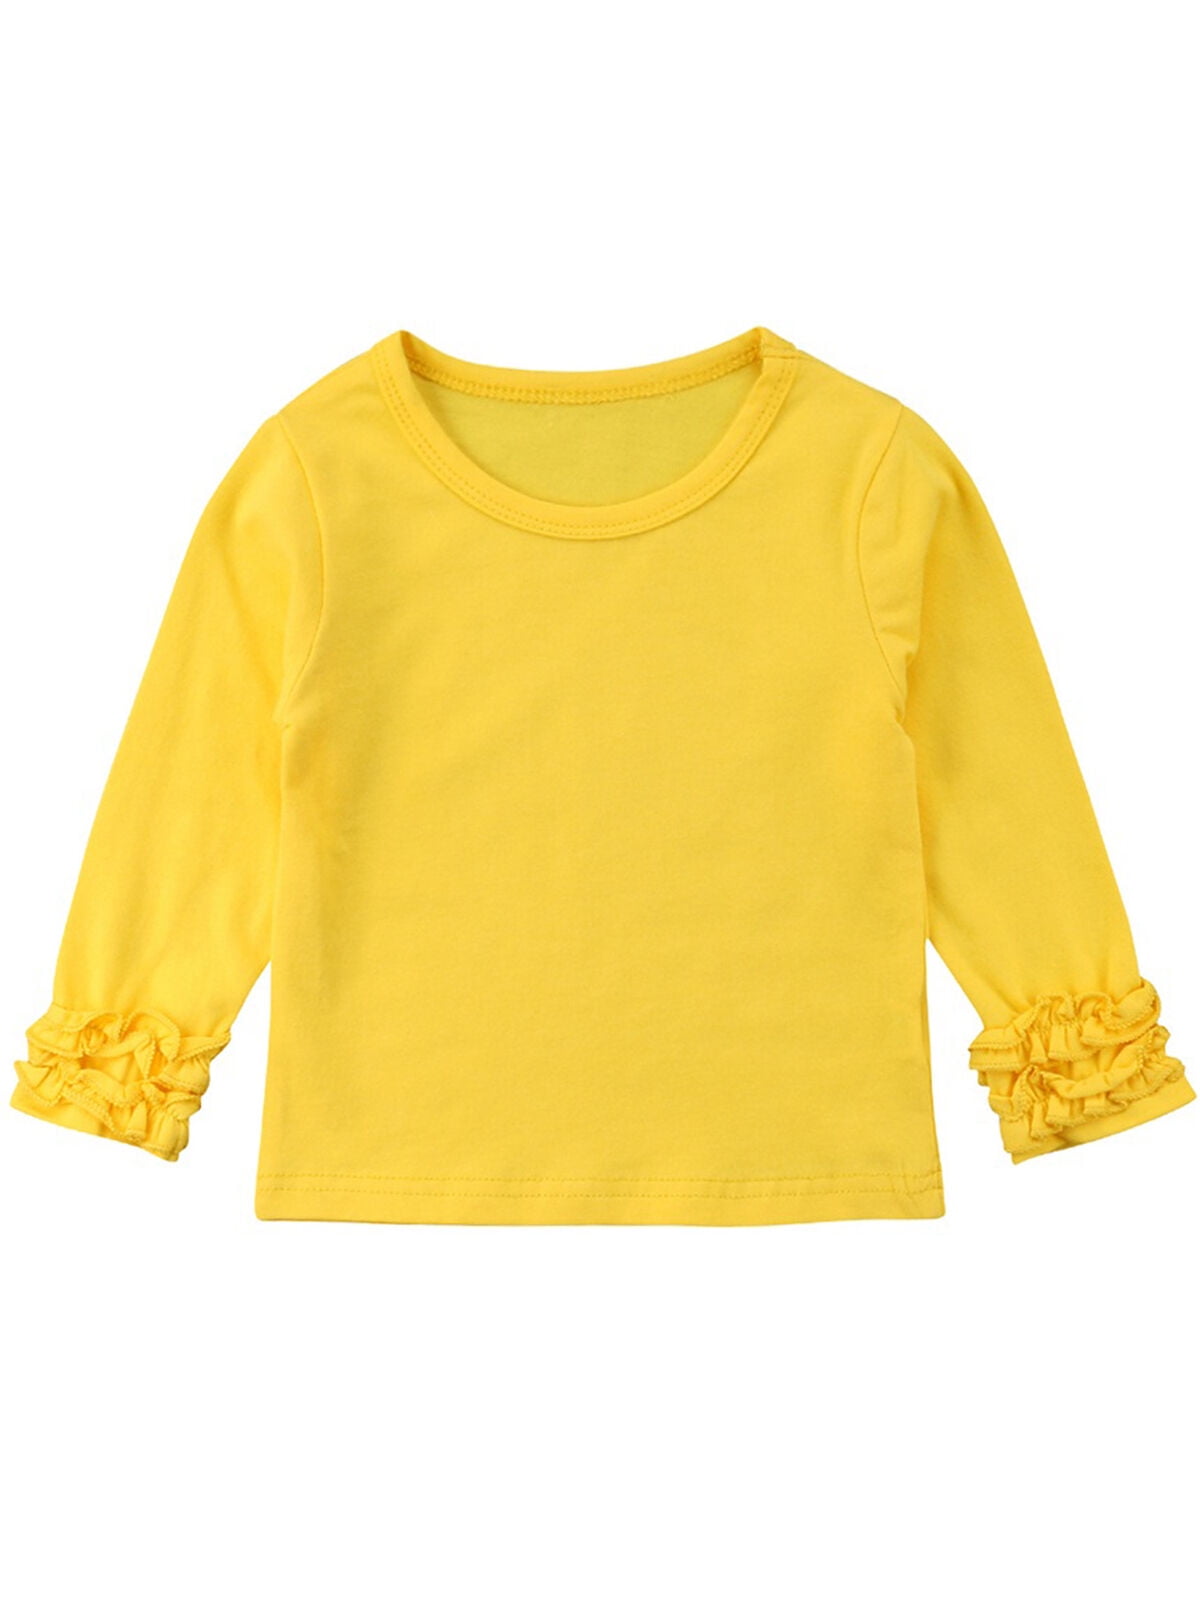 Personalized Address Texas Cotton Girl Toddler Long Sleeve Ruffle Shirt Top